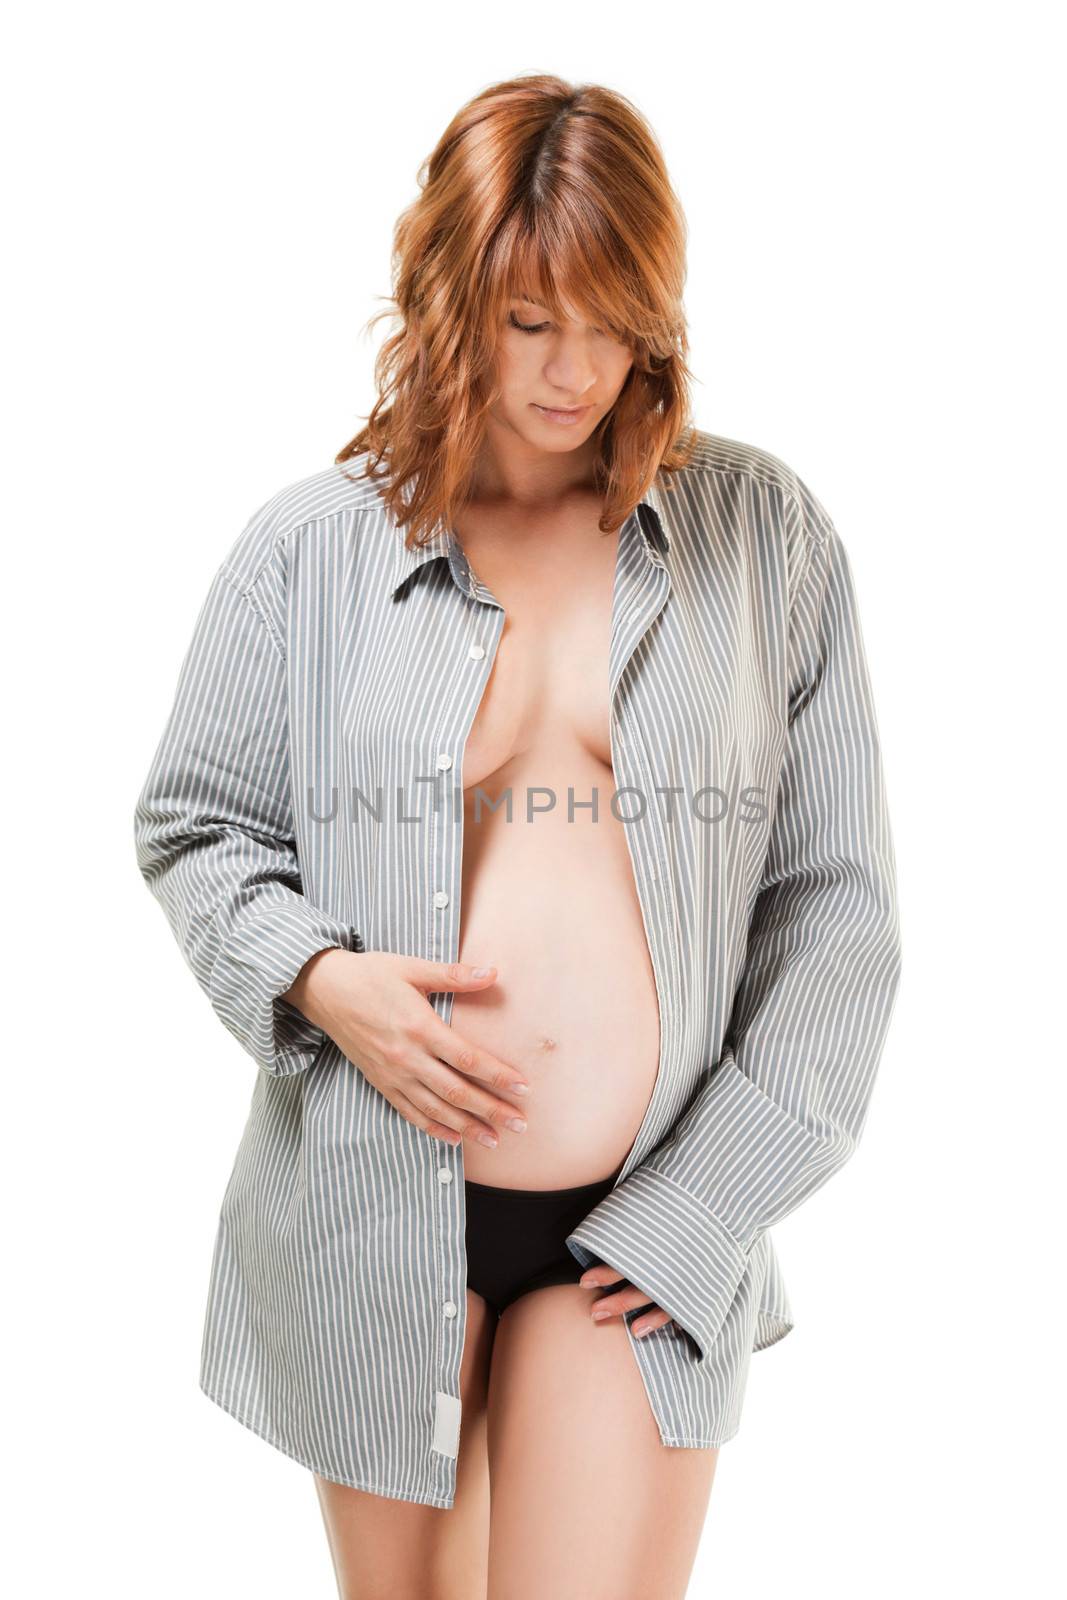 pregnant beautiful woman by vilevi